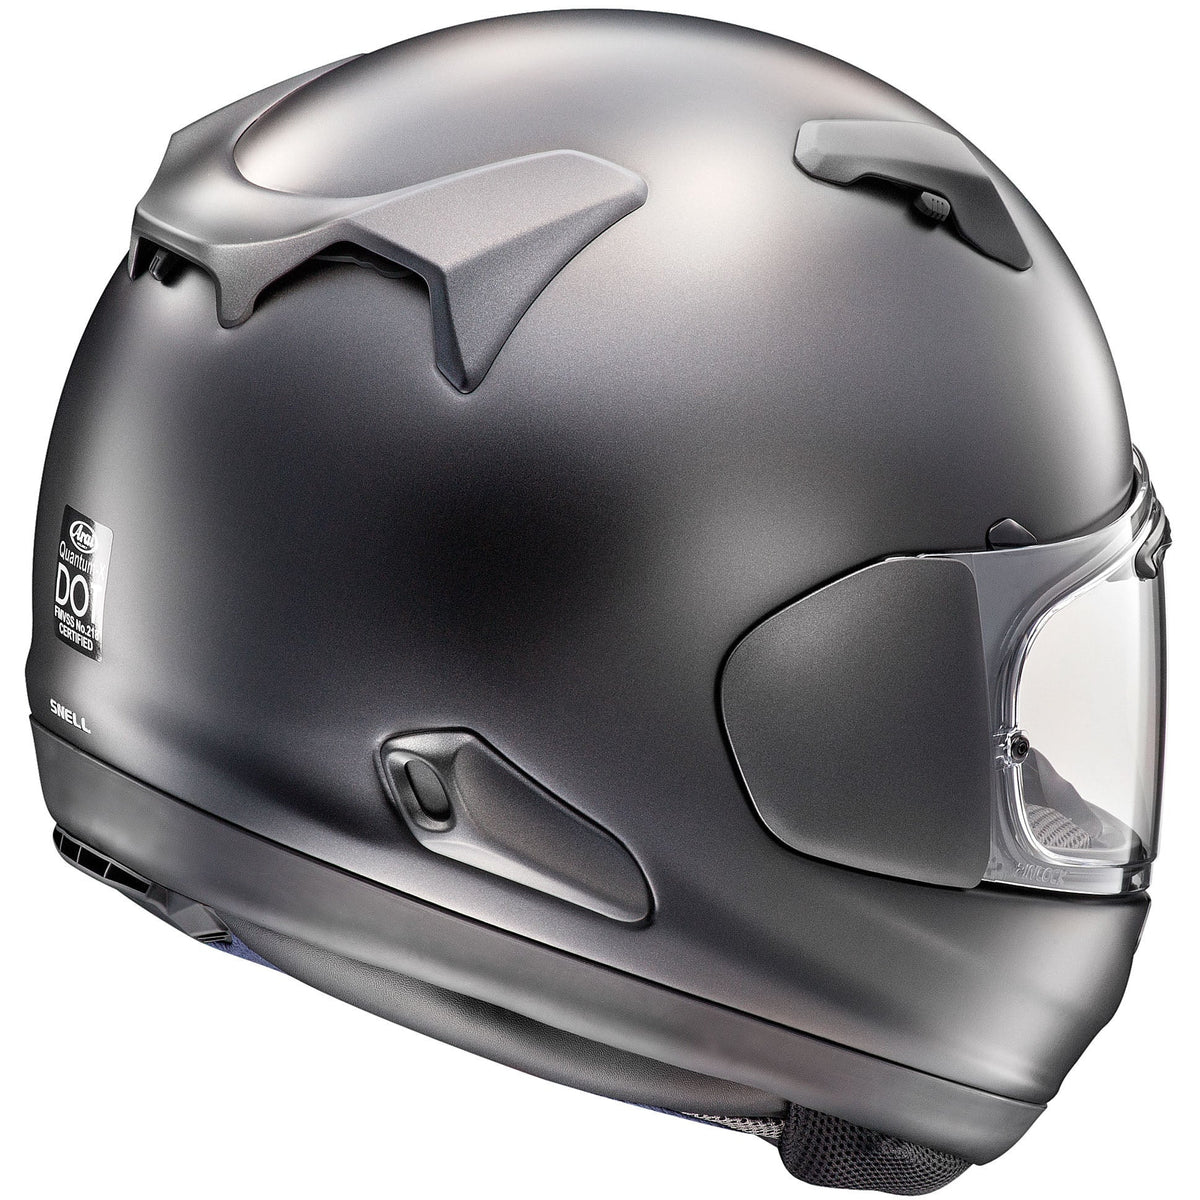 Quantum-X Helmet (Black Frost)